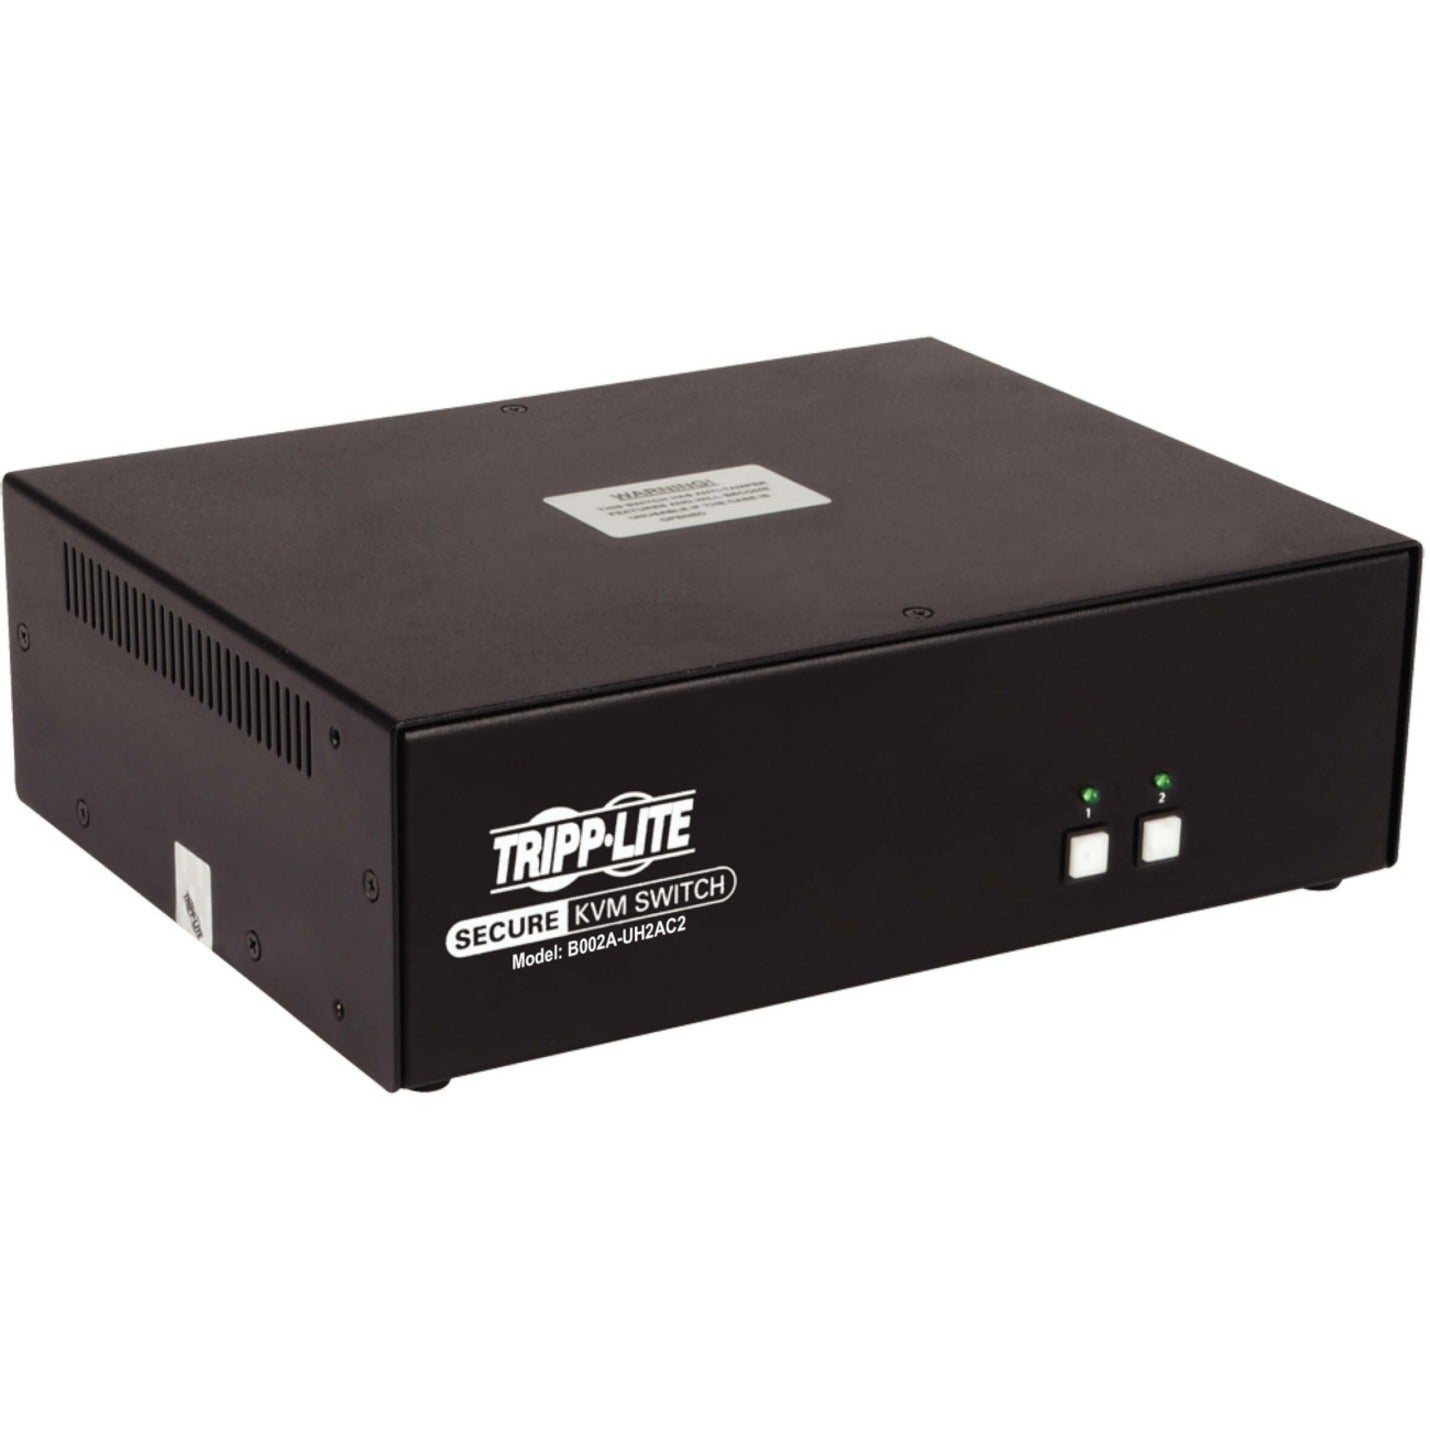 Tripp Lite B002A-UH2AC2 2-Port Dual-Monitor Secure KVM Switch HDMI - 4K NIAP PP3.0 Audio CAC TAA  ブランド名: トリップライト  トリップ ライト B002A-UH2AC2 2-ポート デュアルモニター セキュア KVM スイッチ、HDMI - 4K、NIAP PP3.0、オーディオ、CAC、TAA